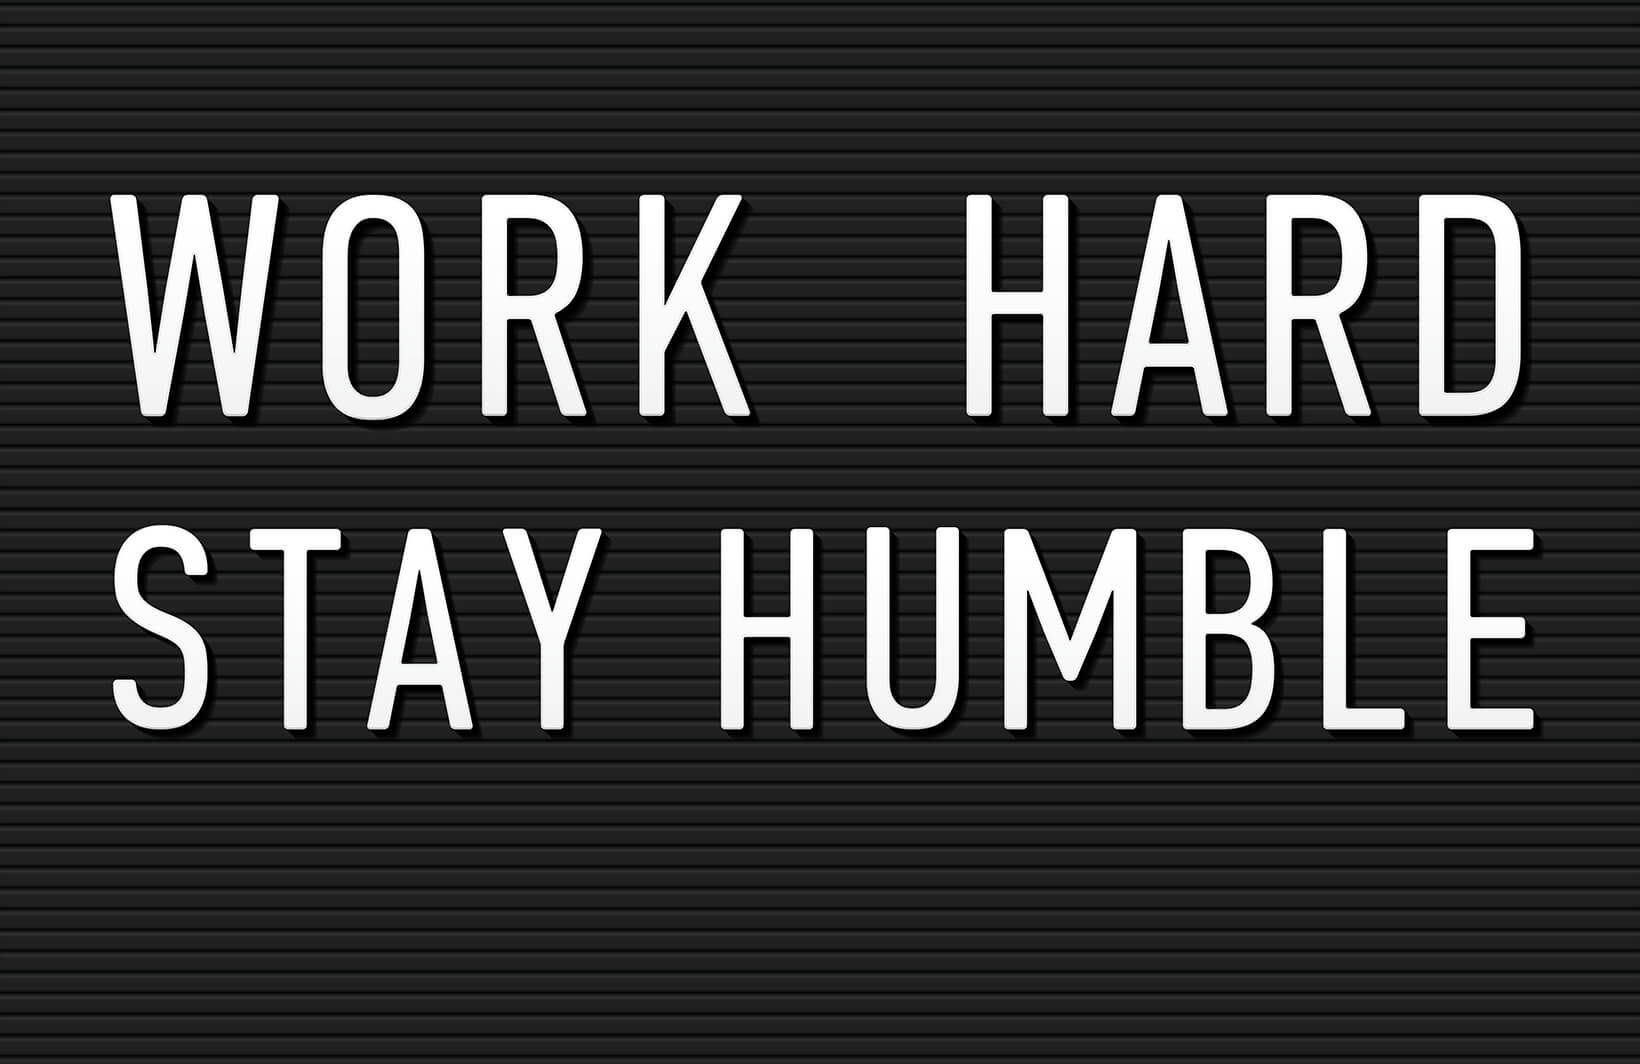 Work Hard Stay Humble' Motivational Wallpaper Mural. Murals Wallpaper. Work hard stay humble, Motivational wallpaper, Stay humble quotes